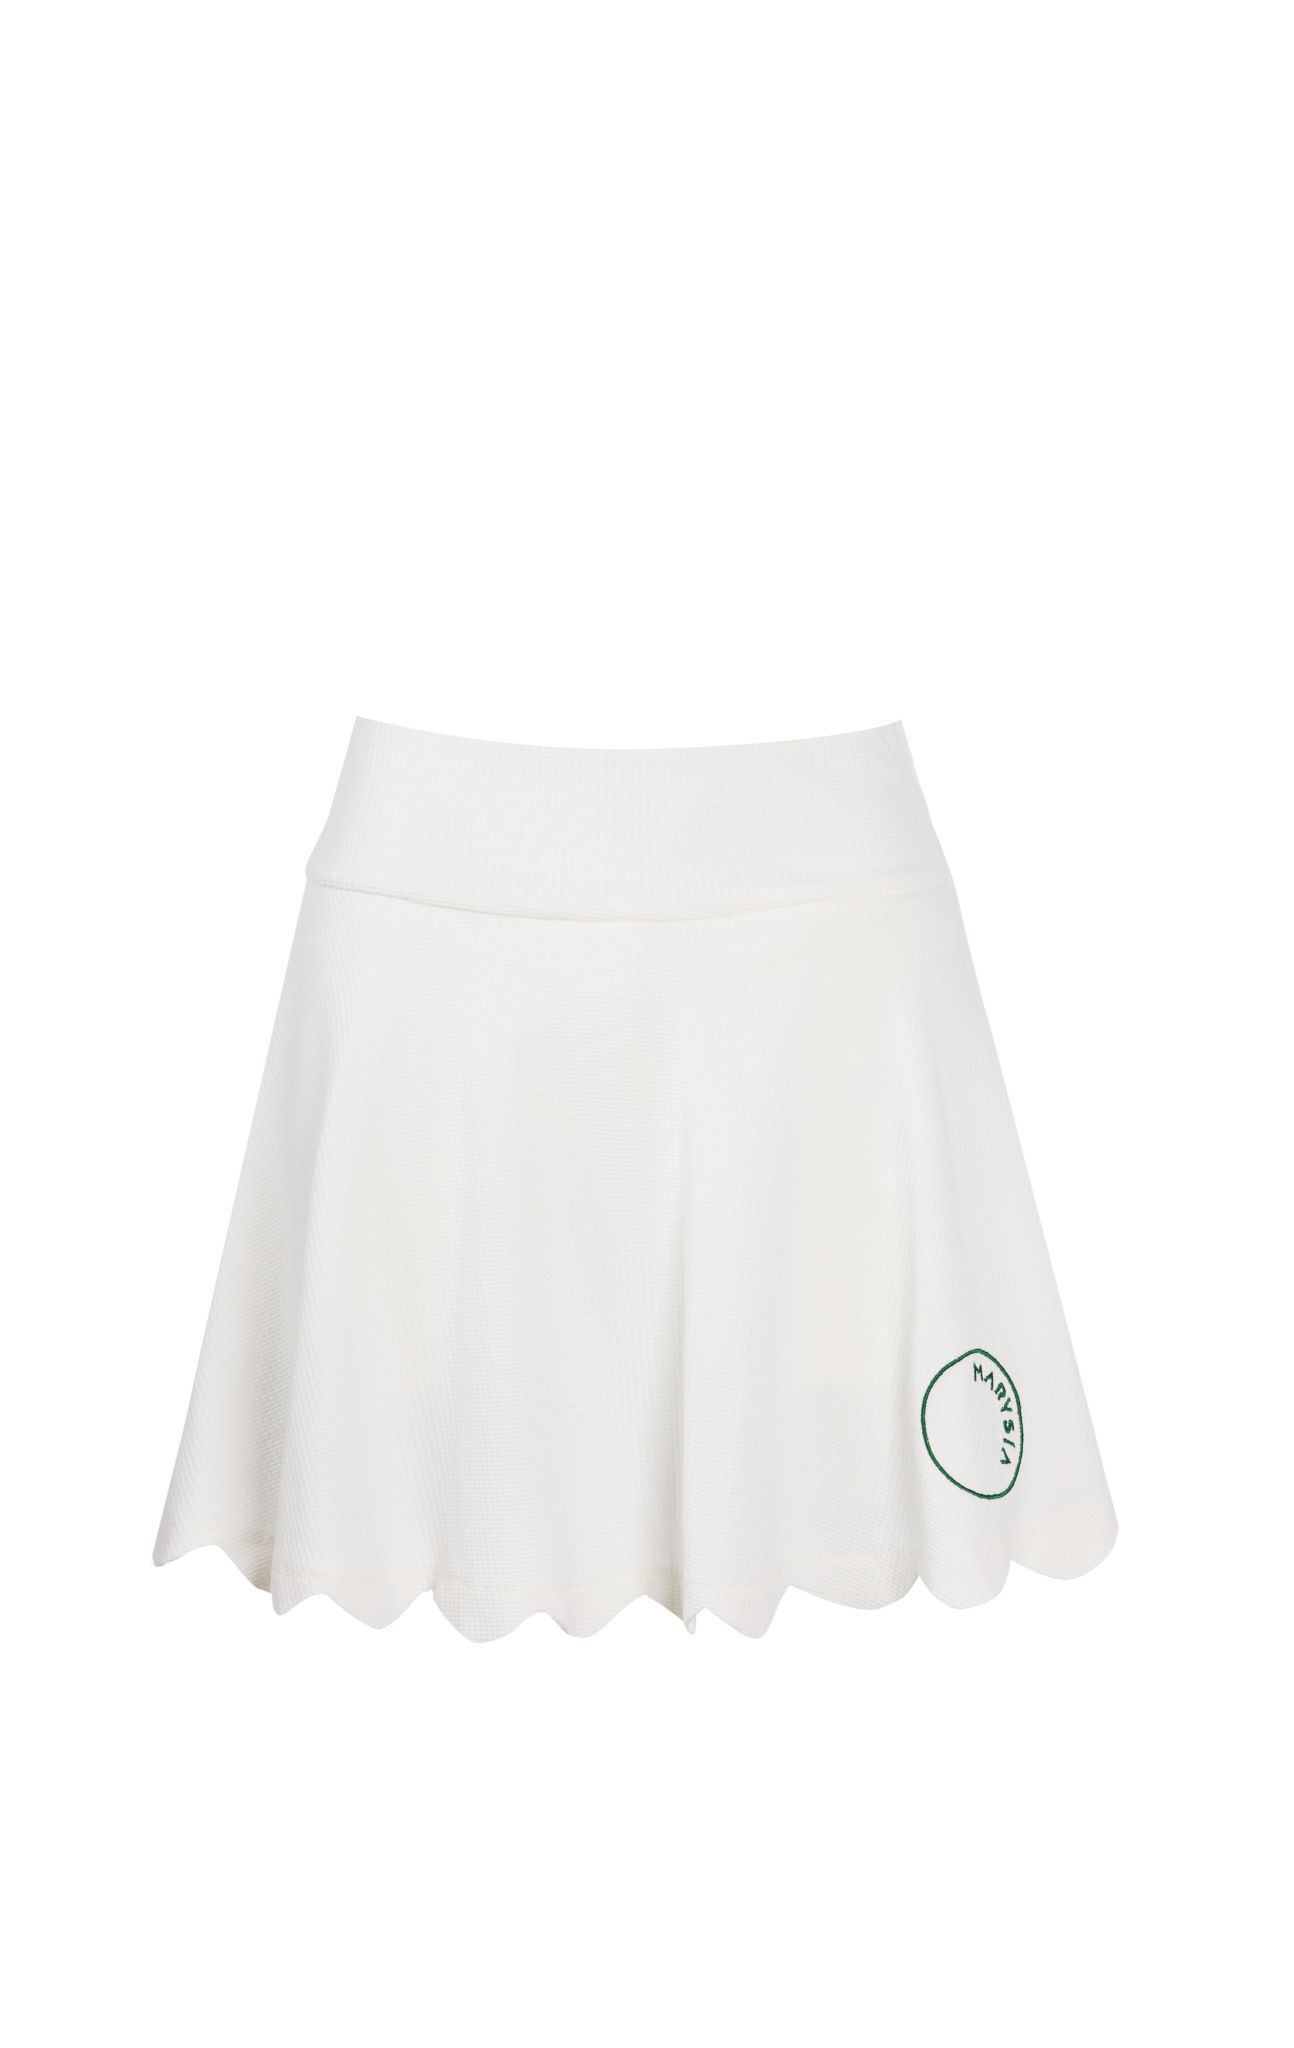 Venus Skirt in Coconut – Marysia